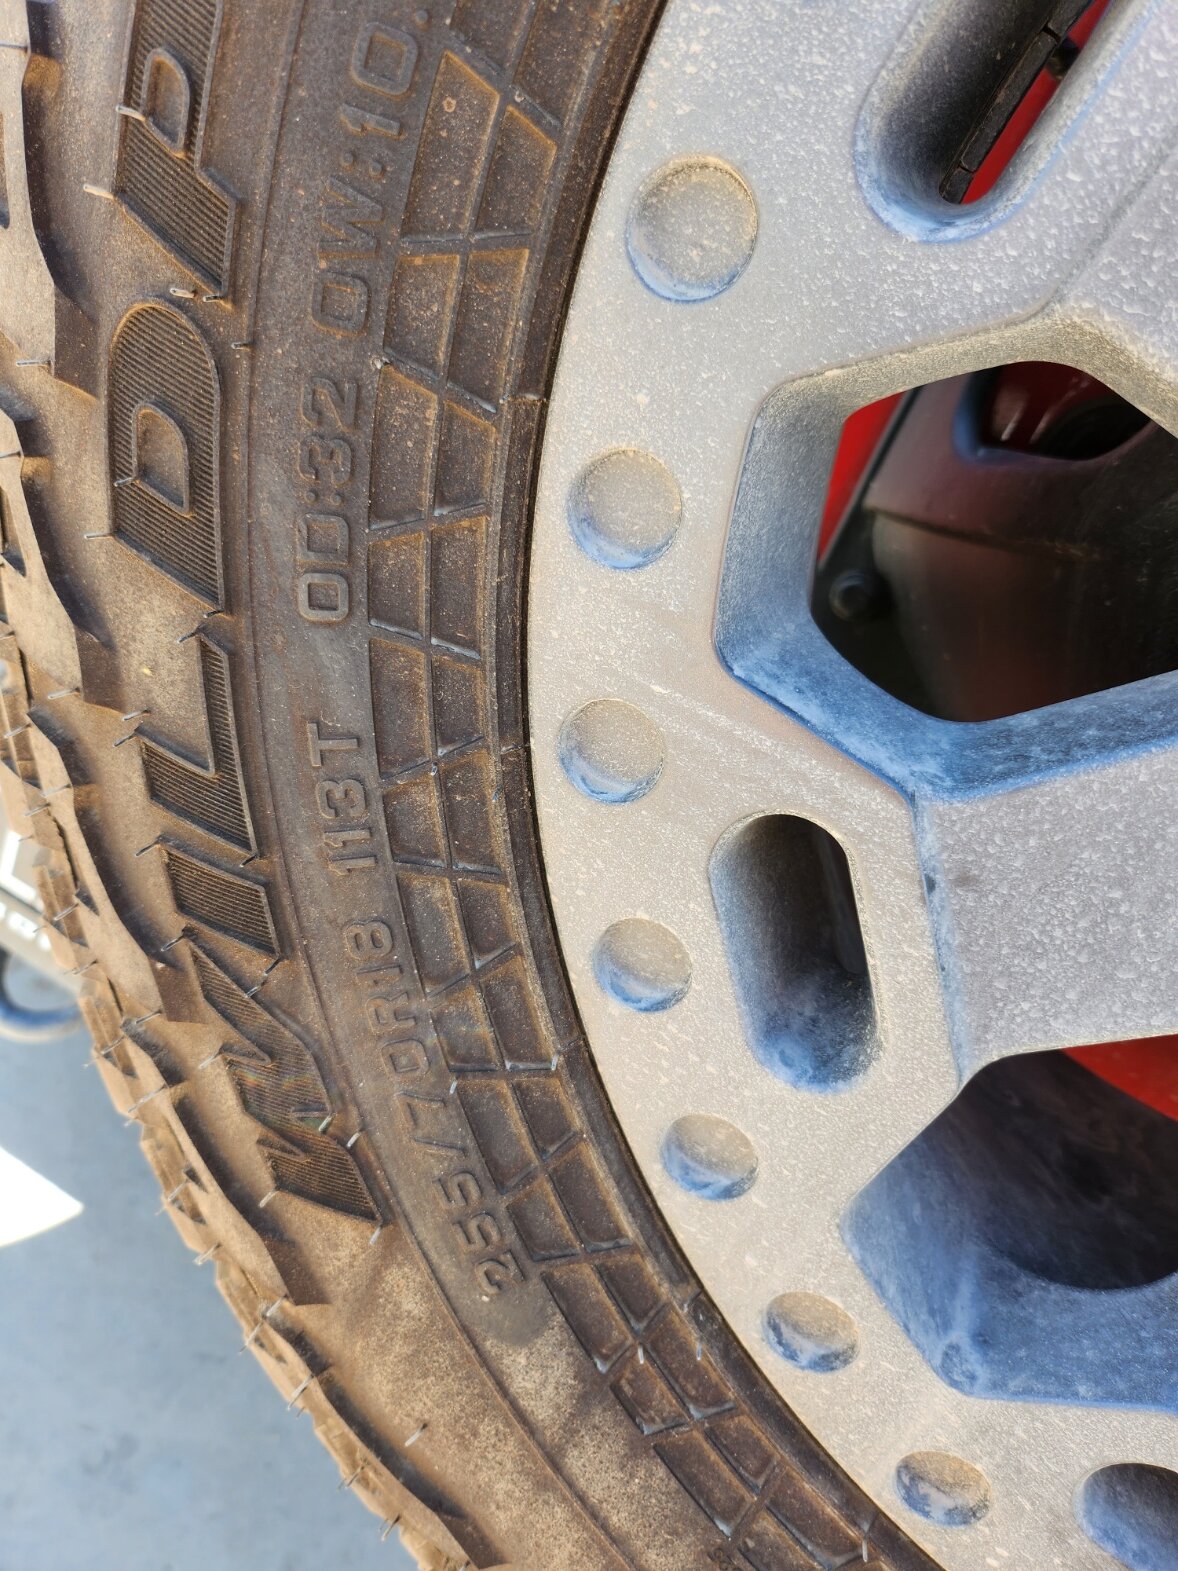 Ford Bronco Black Rhino wheels w/ Falken tires for sale or trade 20230711_145142